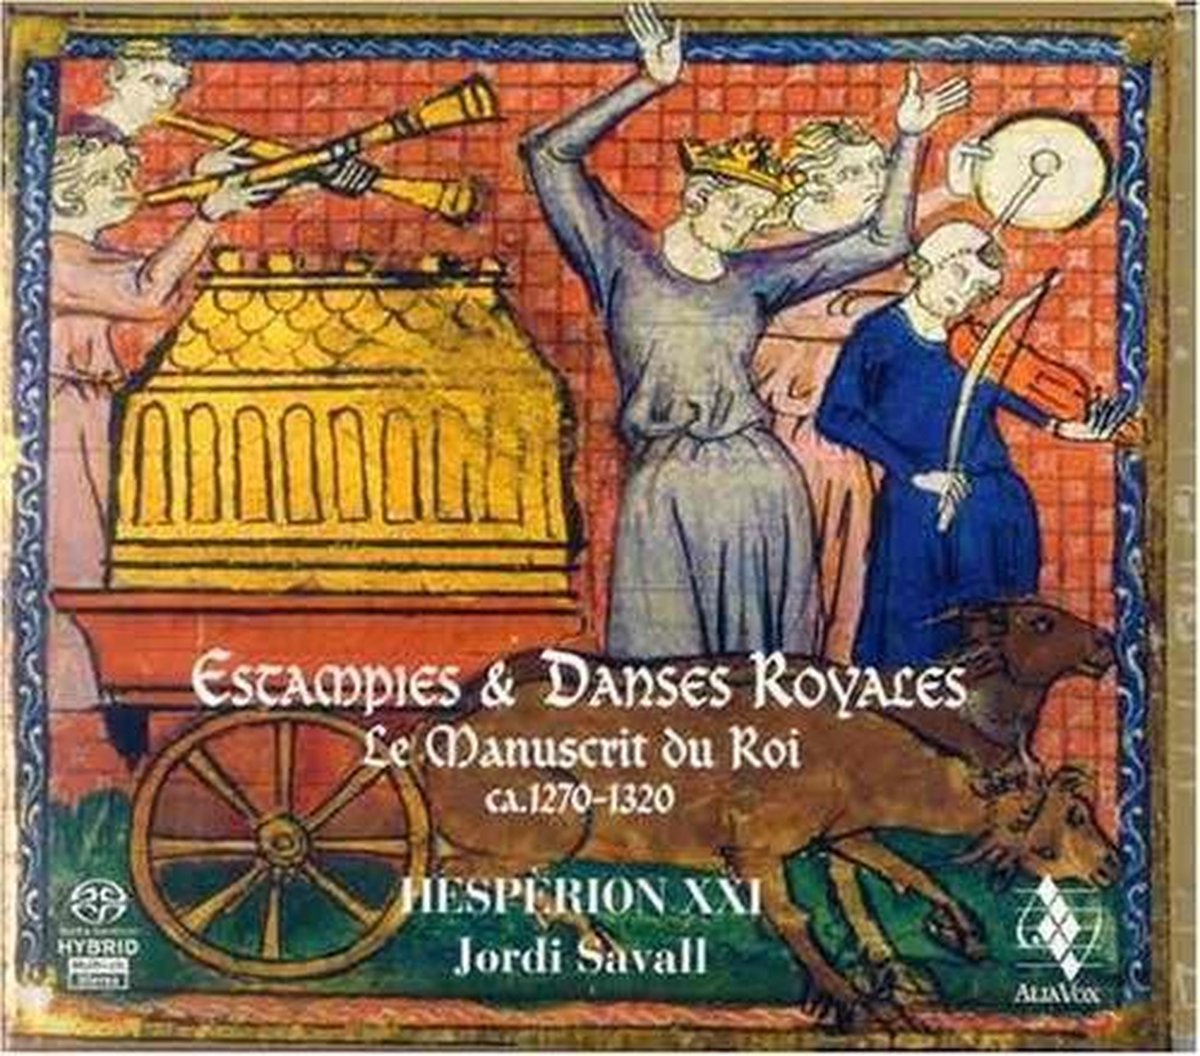 Jordi & Hesperion XXI Savall - Estampies & Danses Royales (CD) - Capella Reial Hesperion Xxi